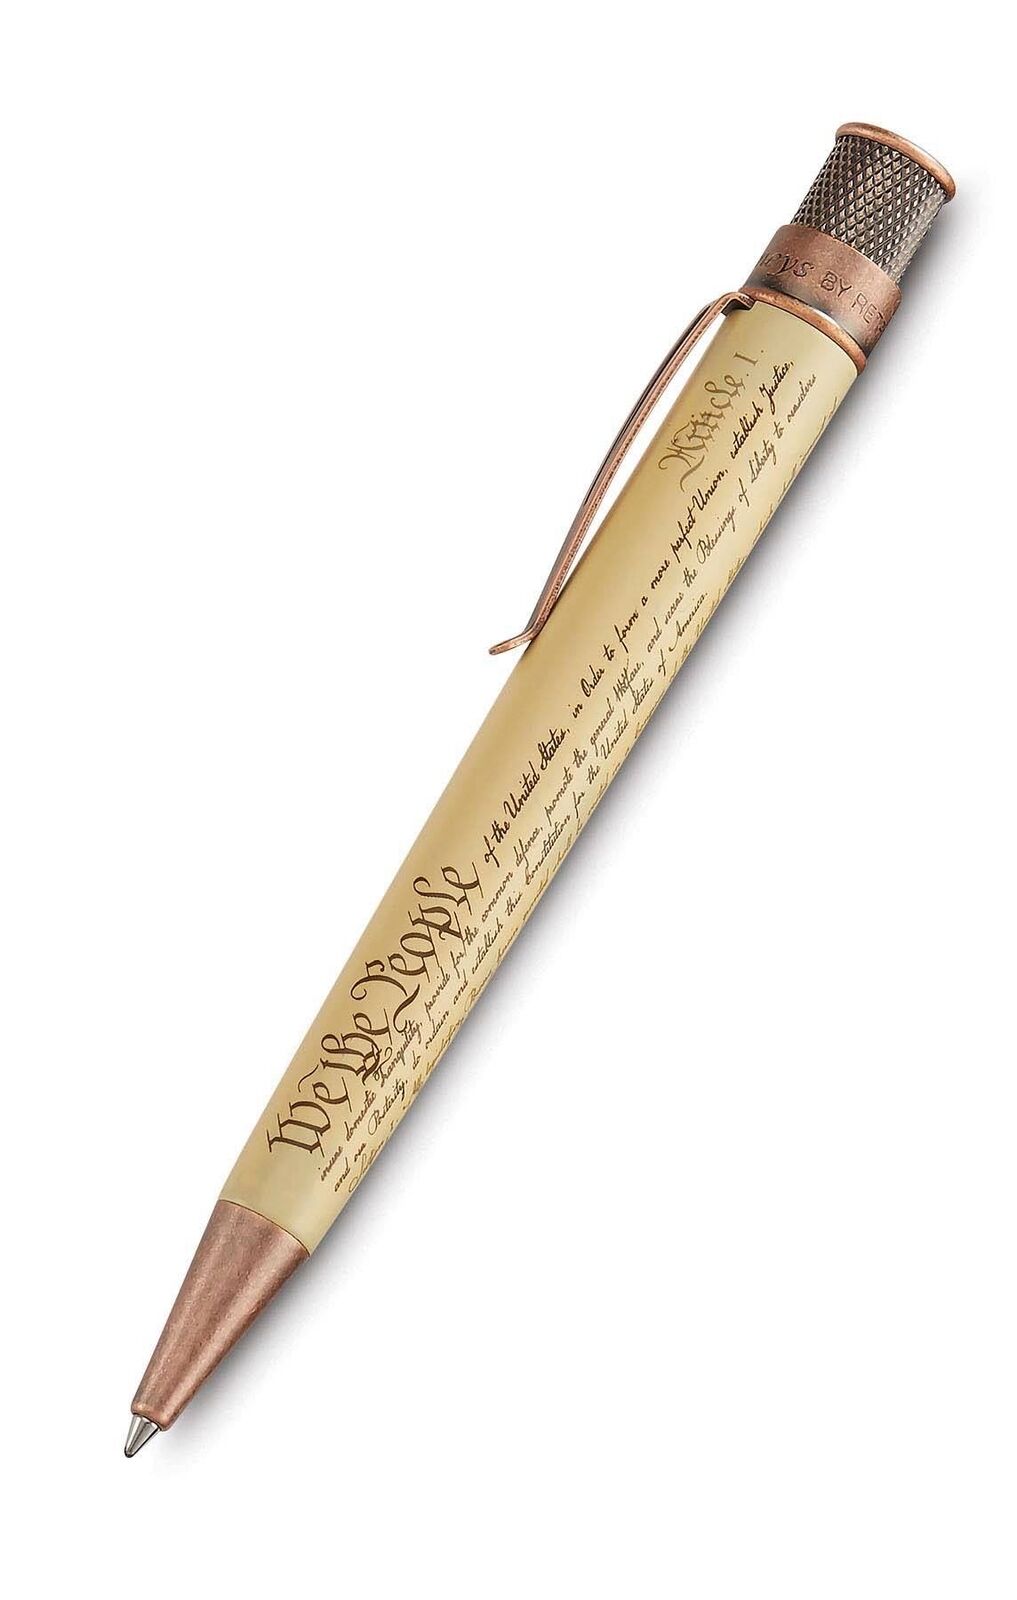 Retro 51 Fahrney's Constitution Rollerball Pen